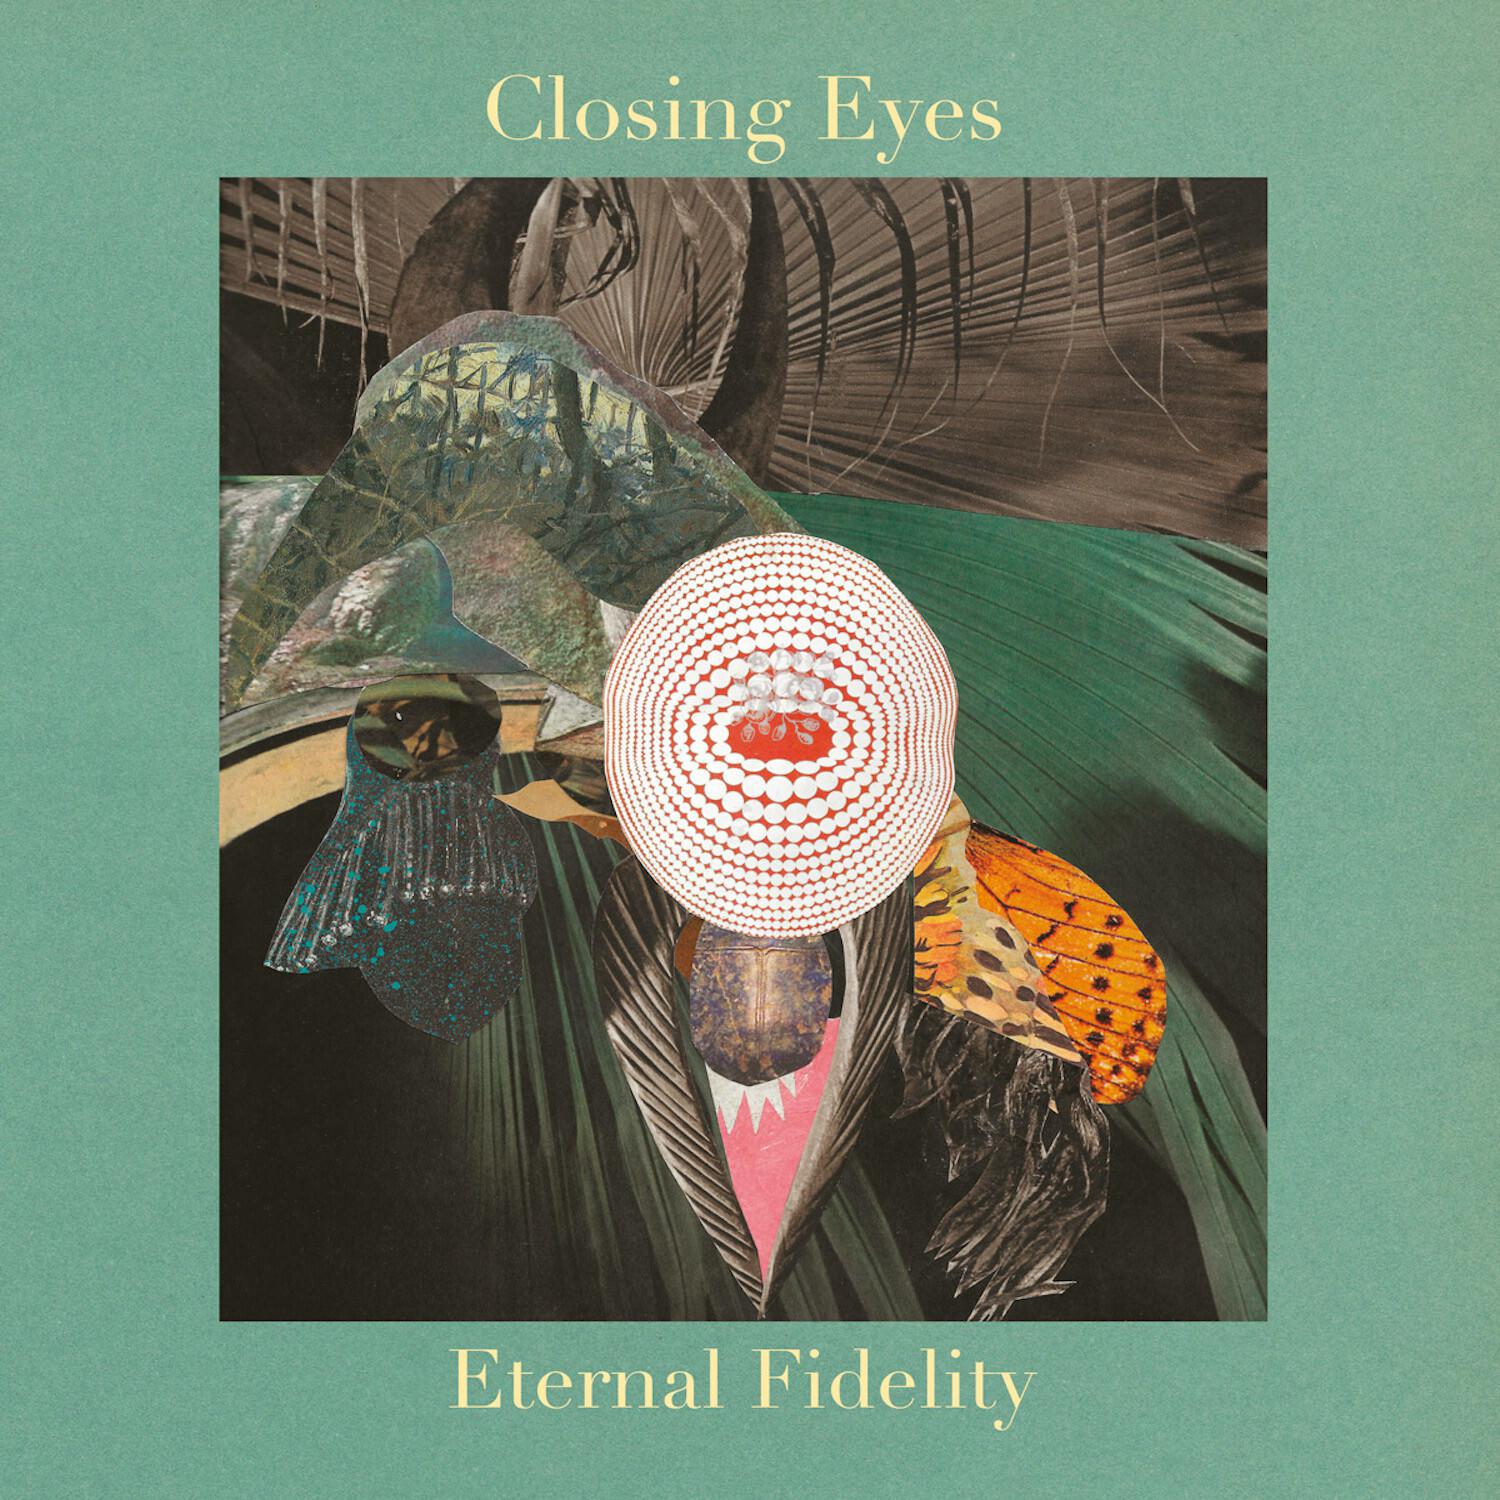 Closing Eyes - Eternal Fidelity (Opening Scene)